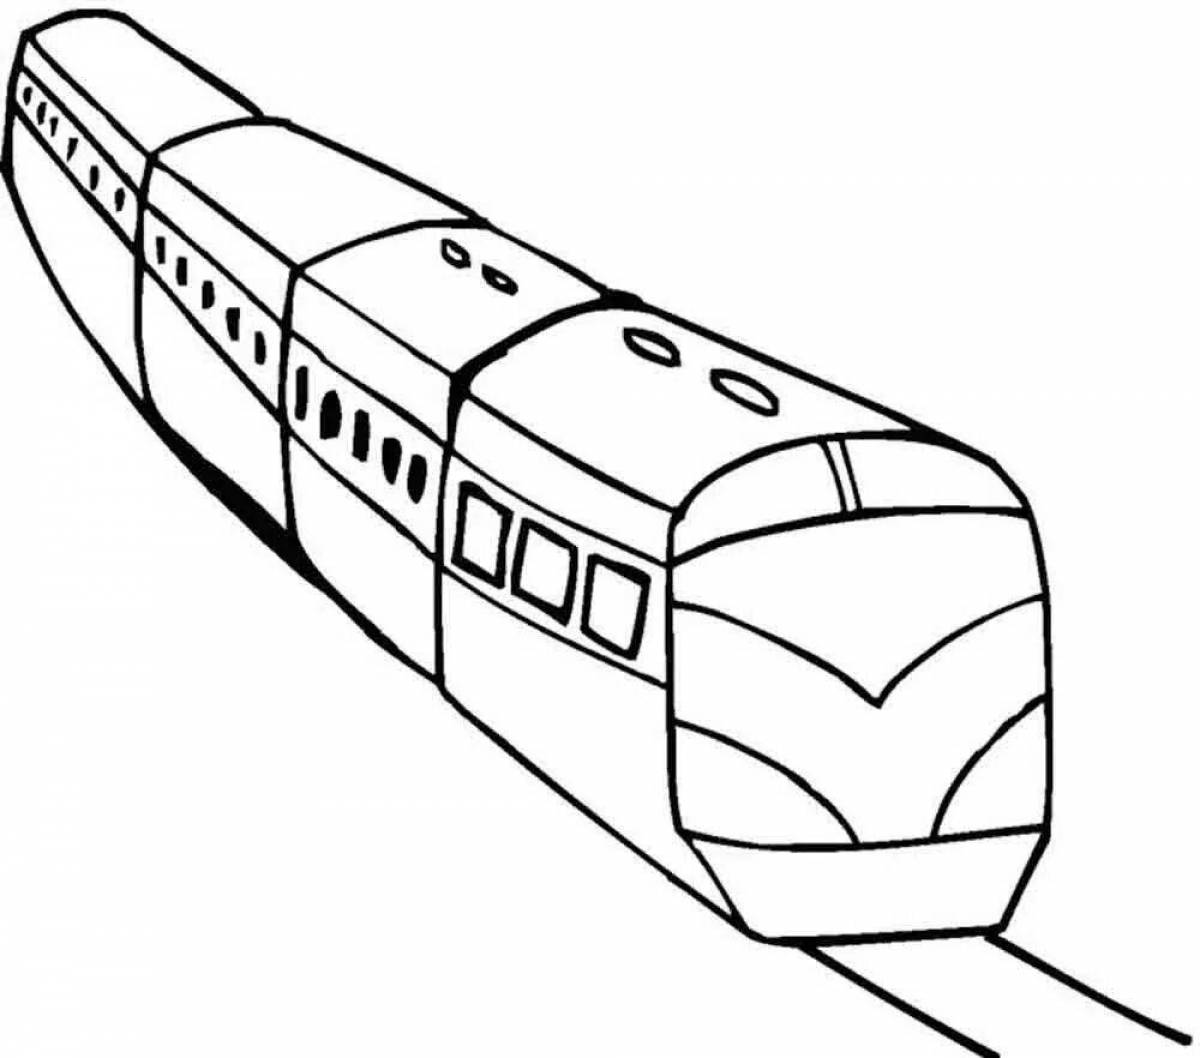 Great rail transport coloring book